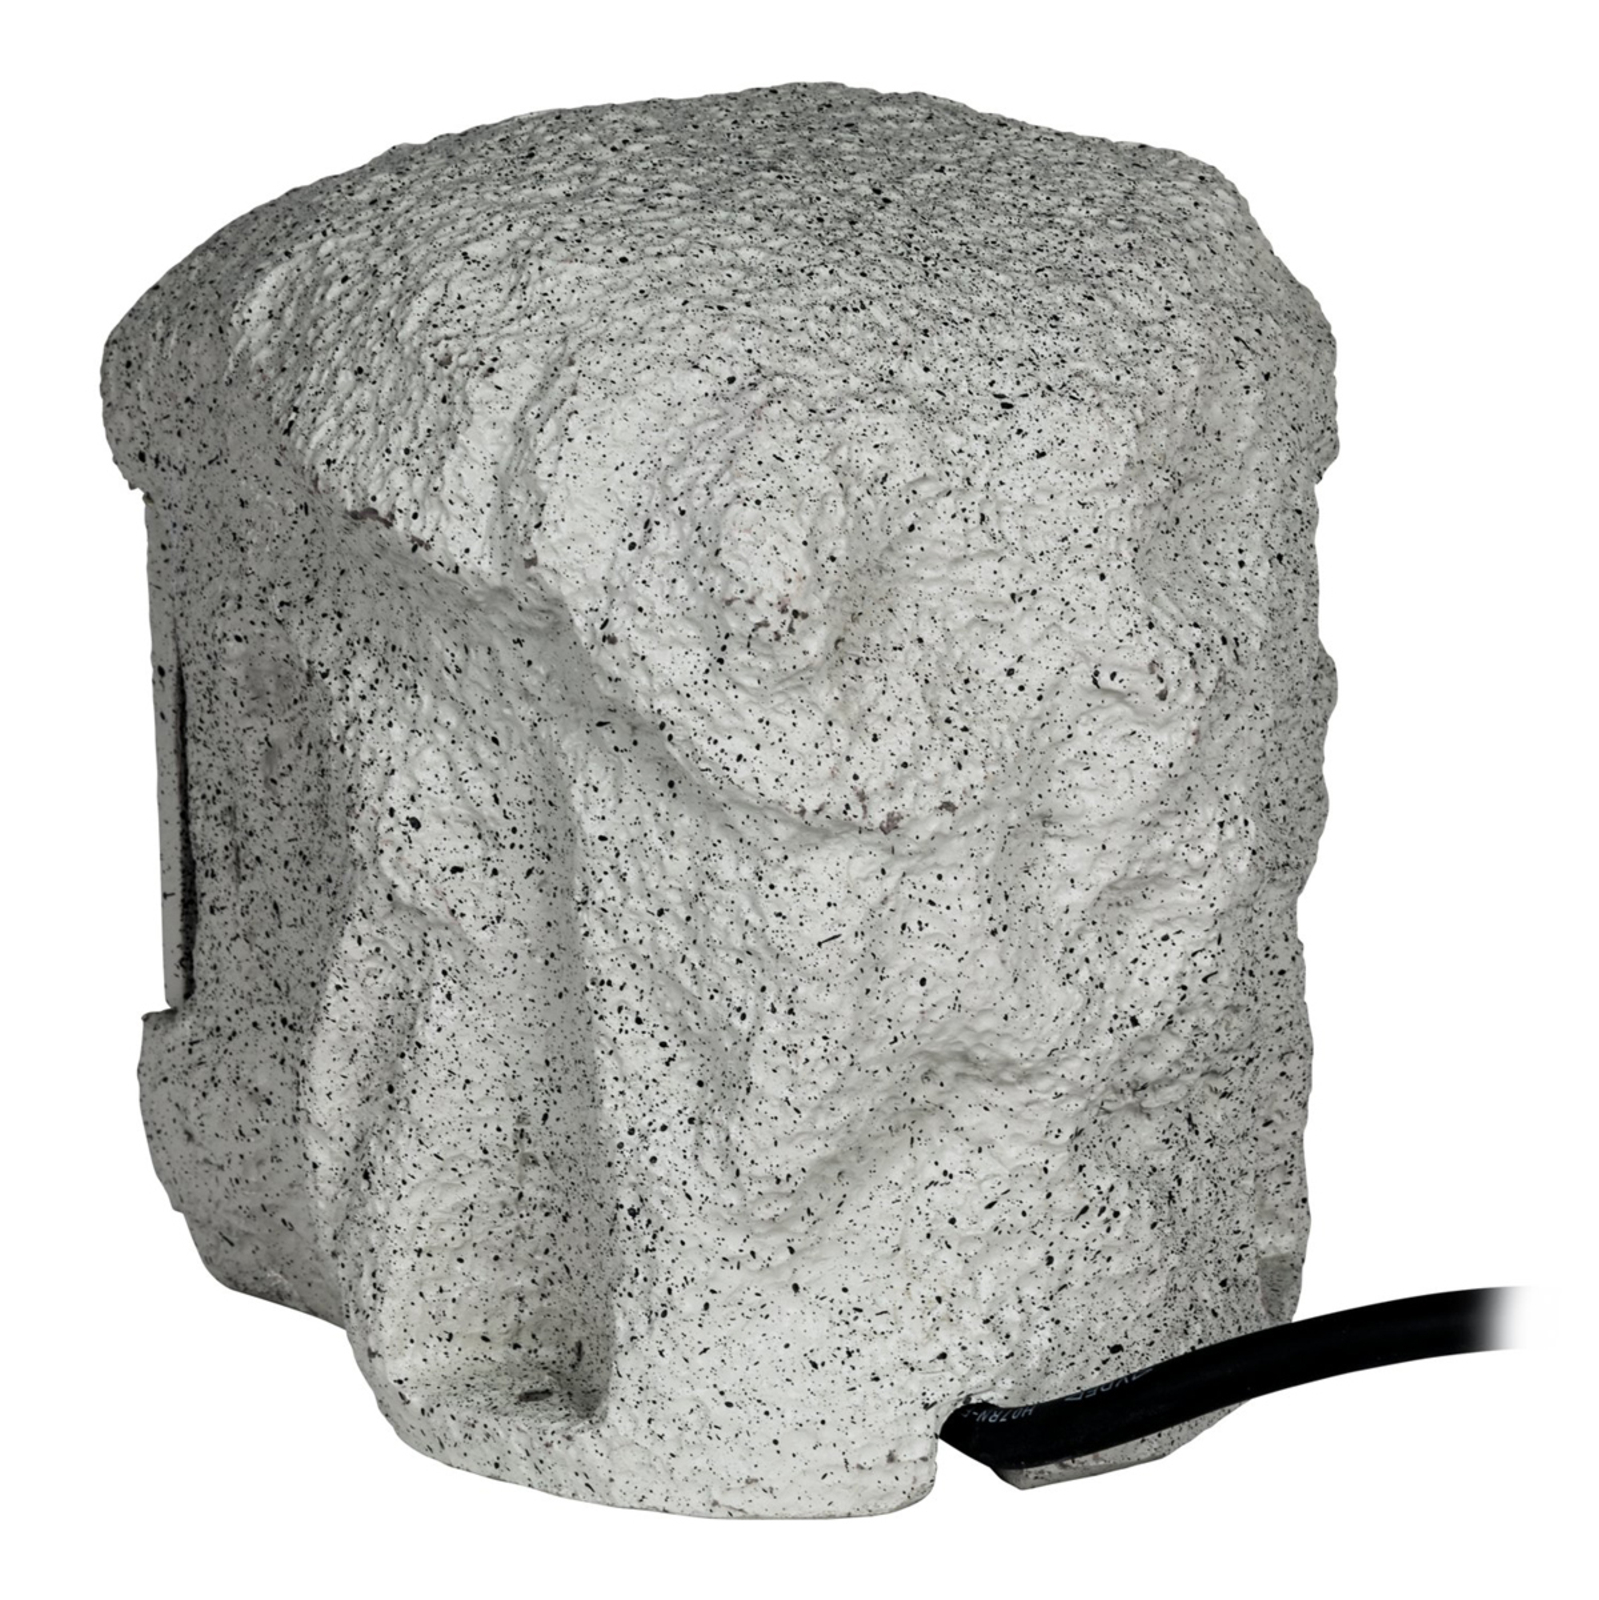 Rozdeľovač energie Piedra vzhľad granit exteriér